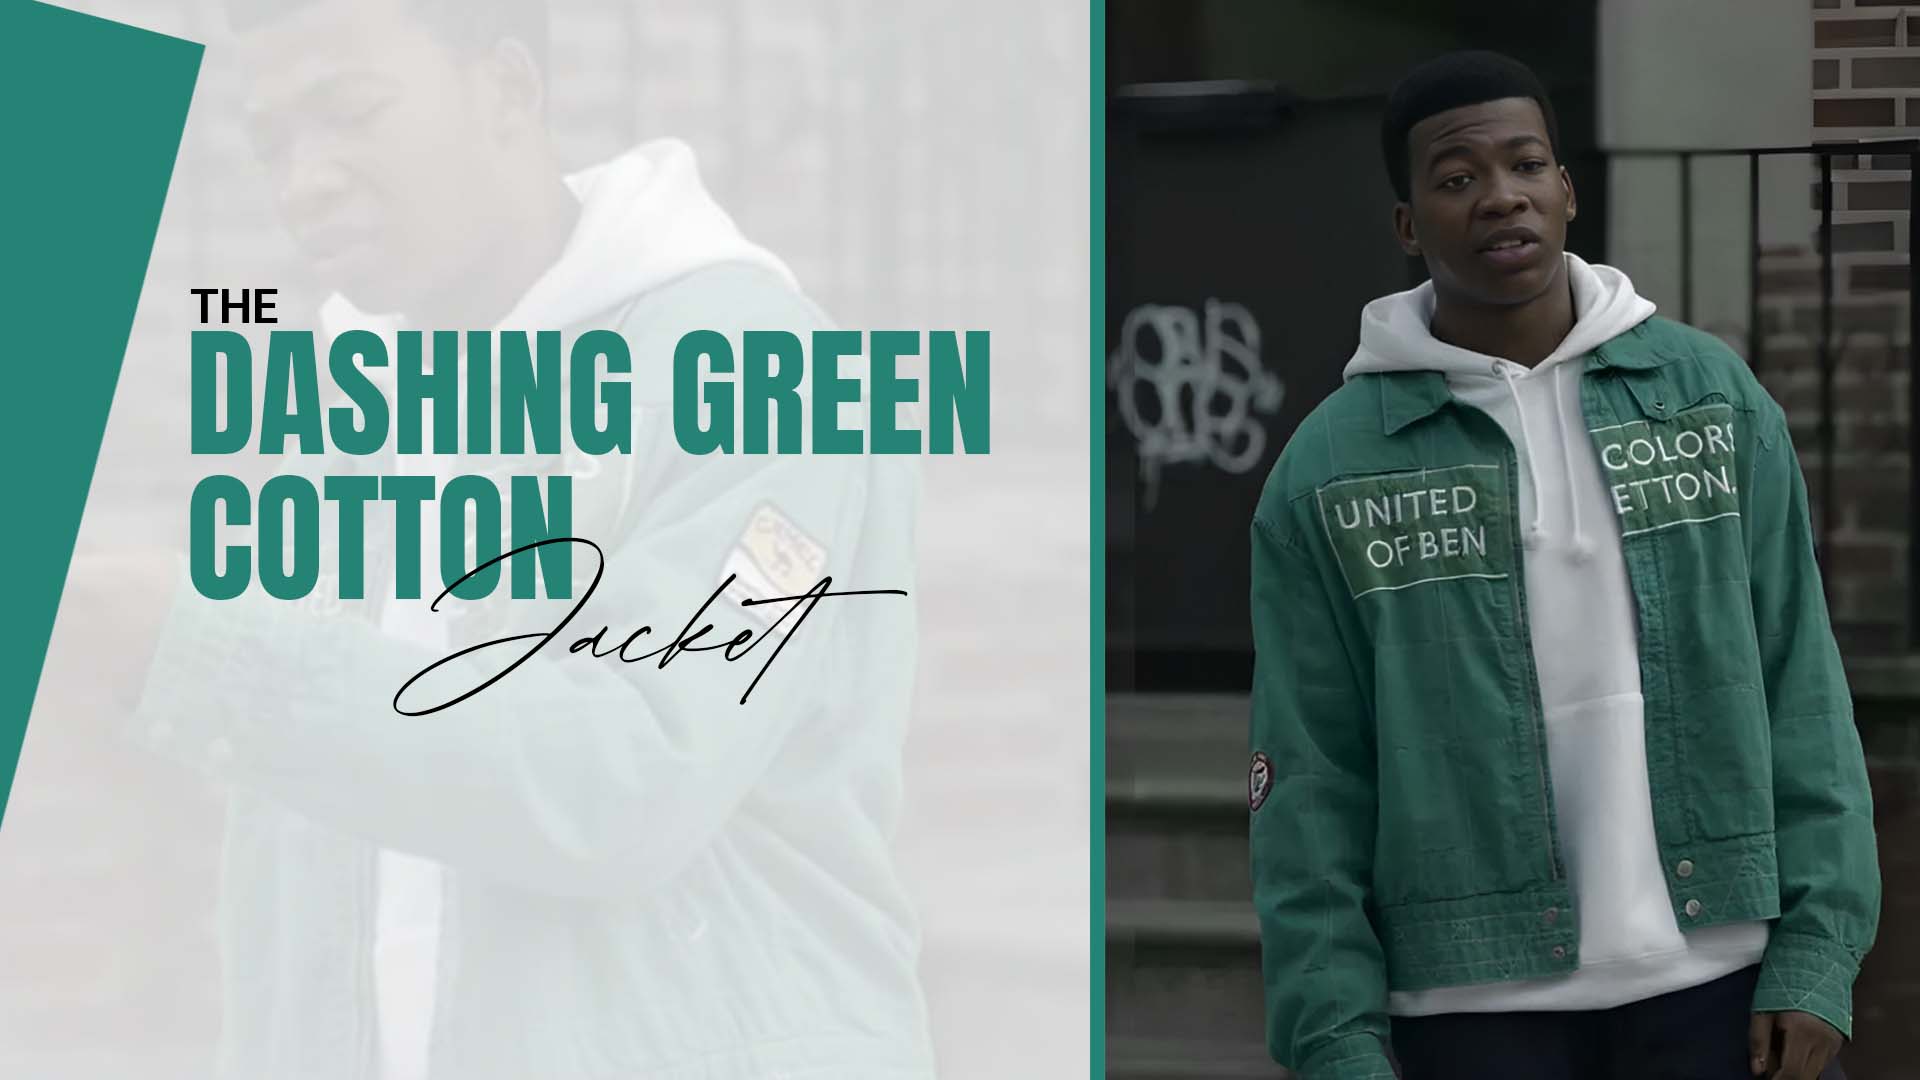 The Dashing Green Cotton Jacket